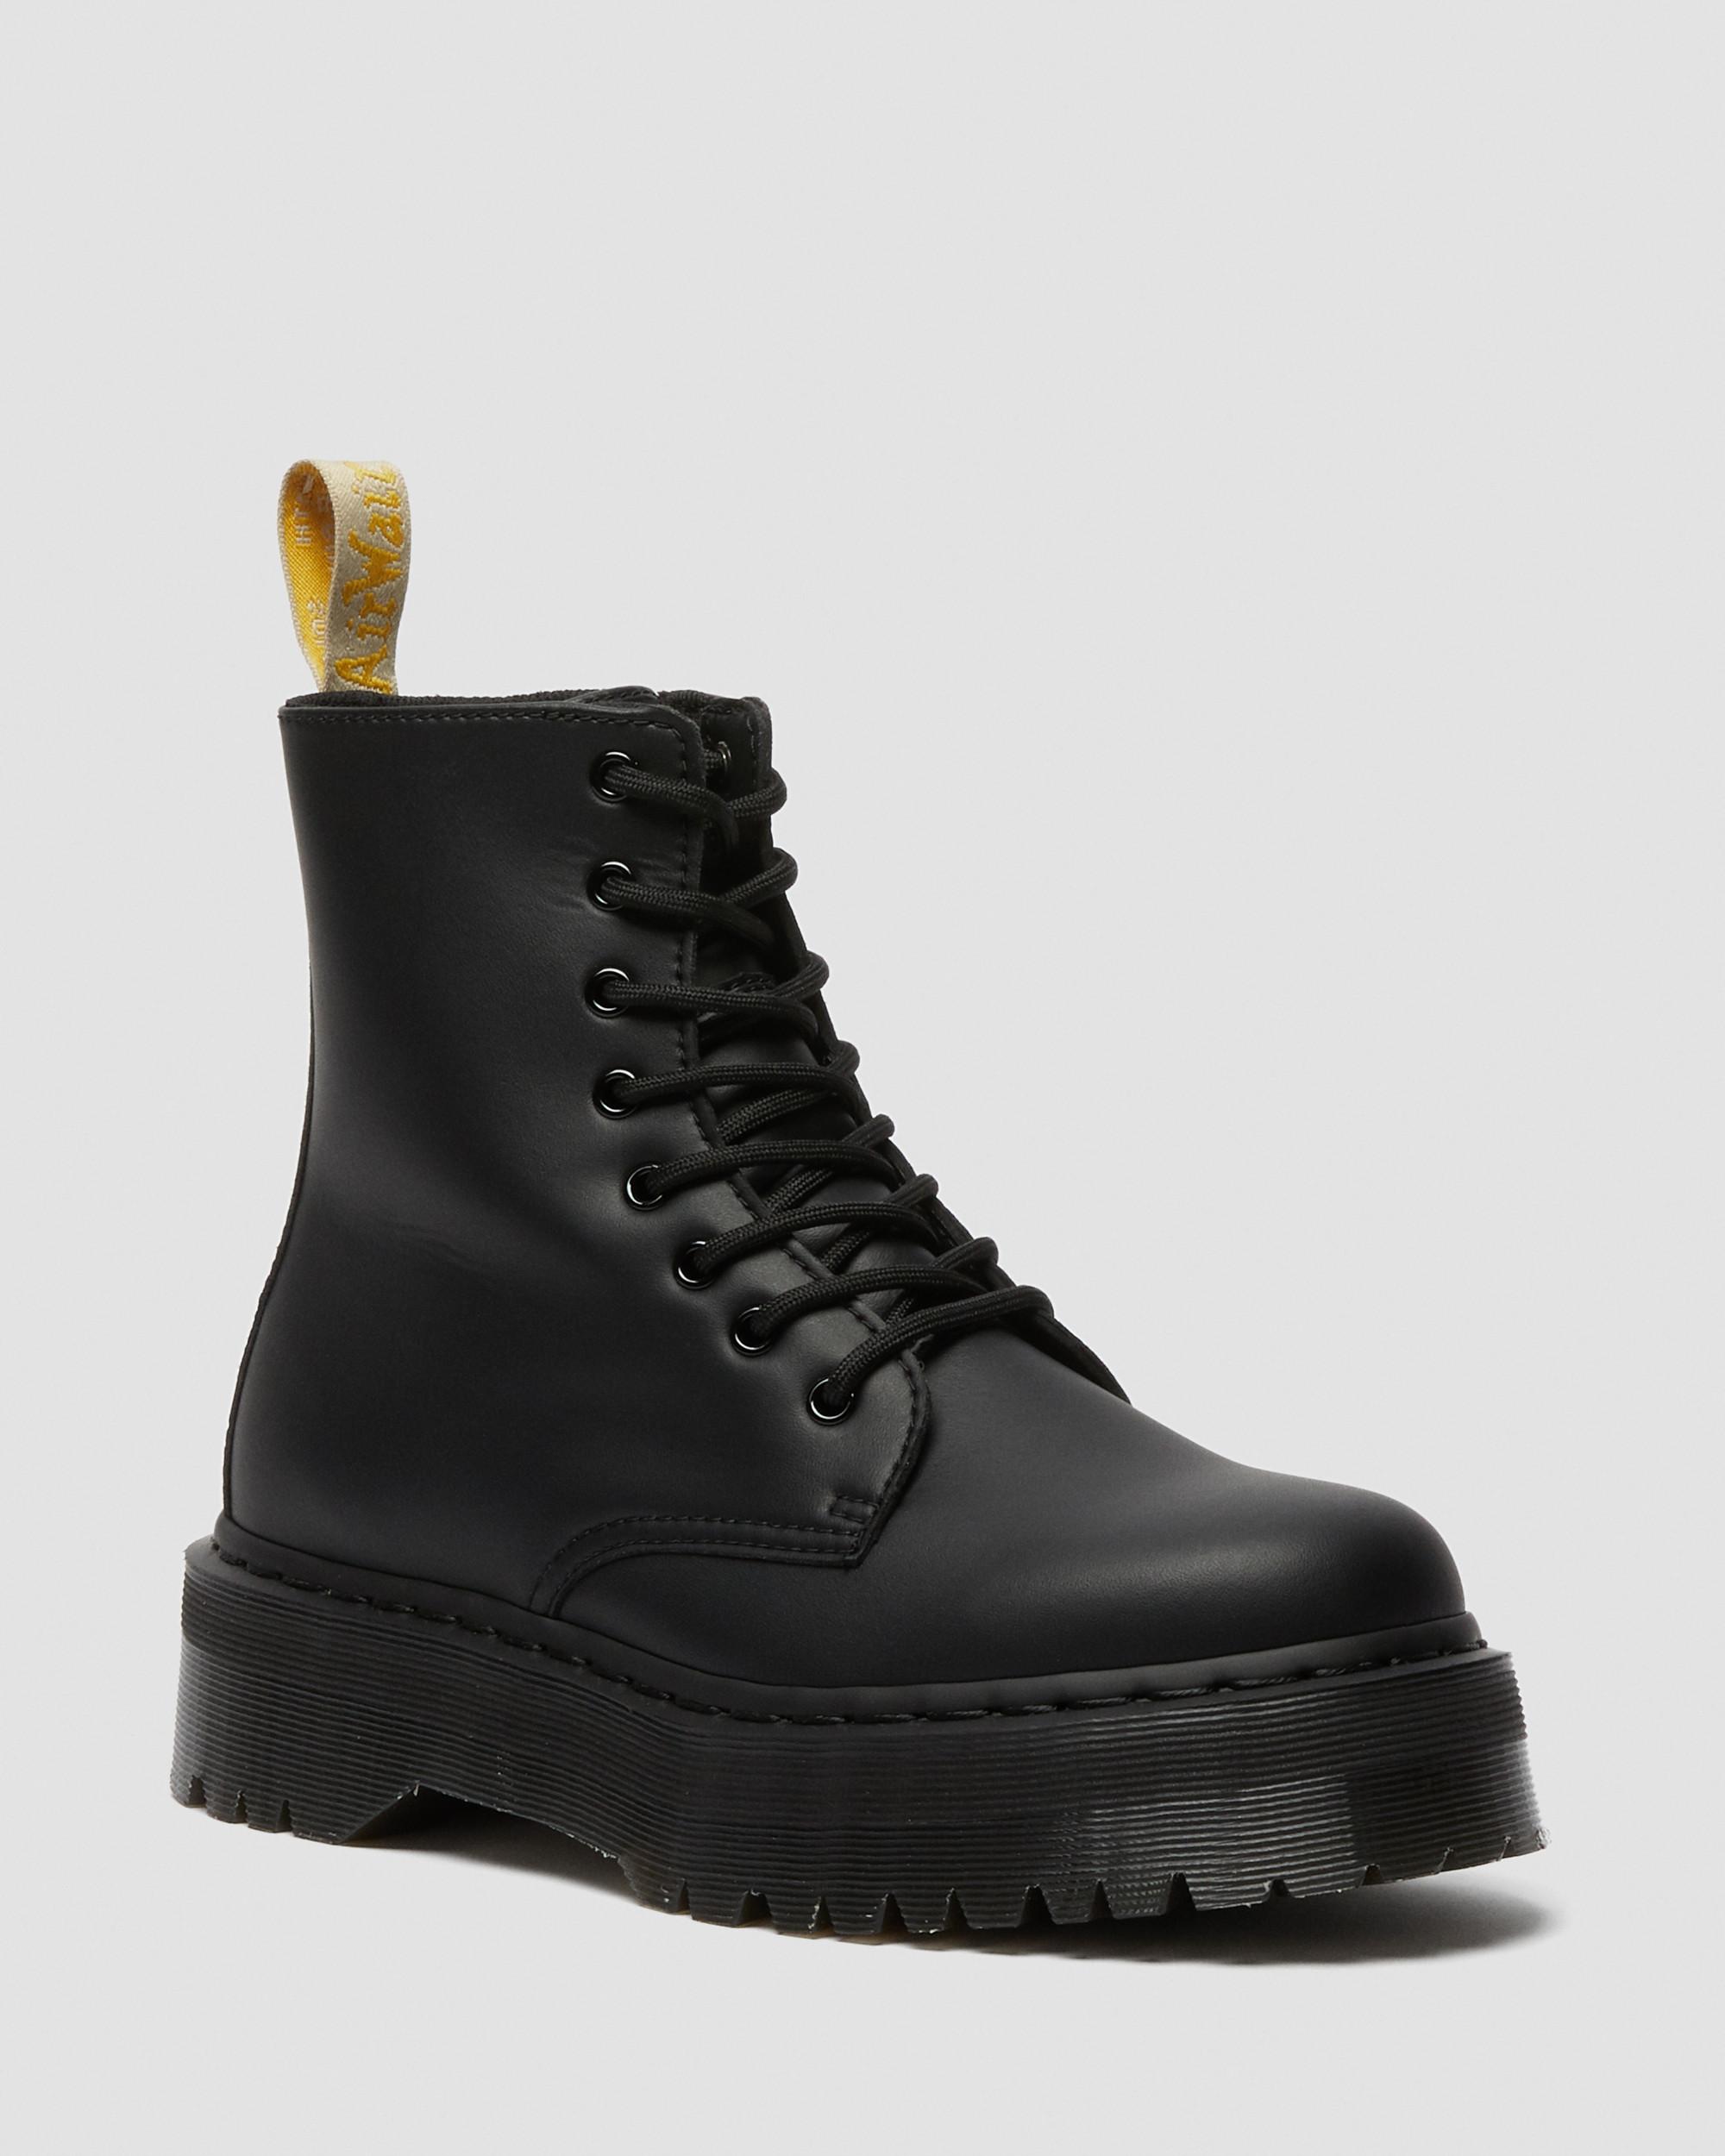 Waterproof platform snow boots vegan D.Franklin DFSH370004 Black